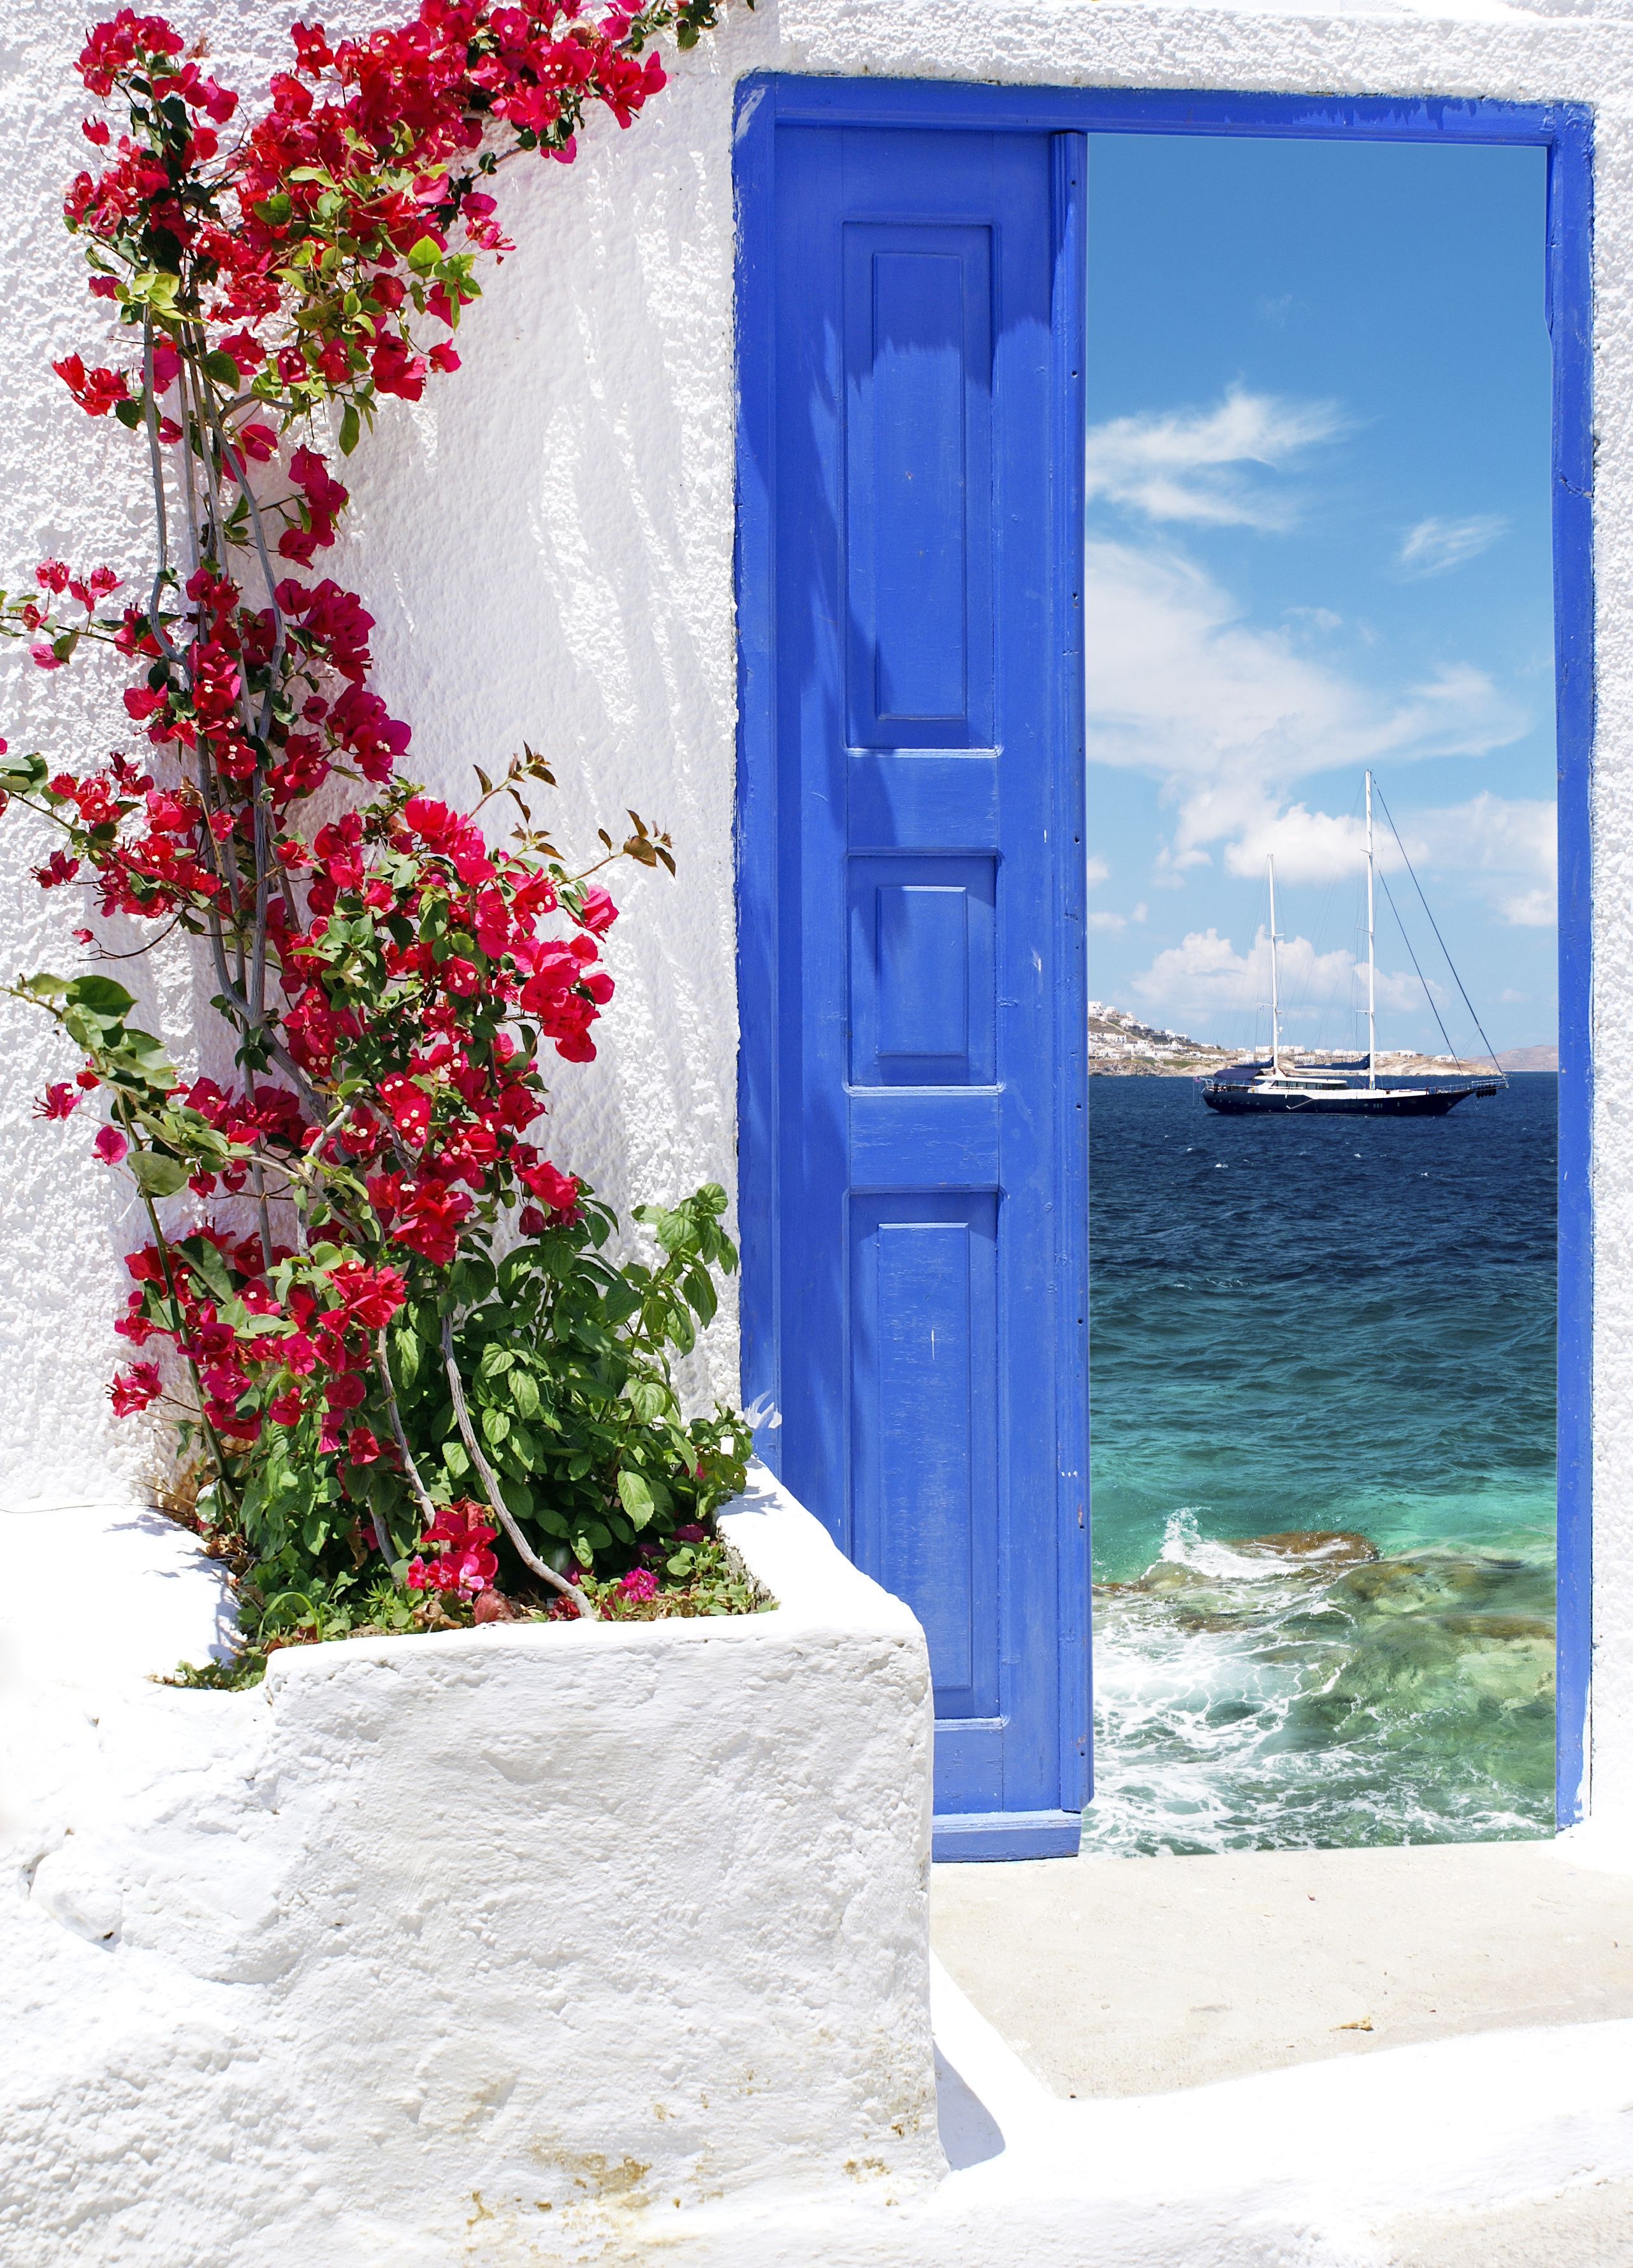 Mykonos Cyclades Islands Wallpaper Greece World Heron Island Photo